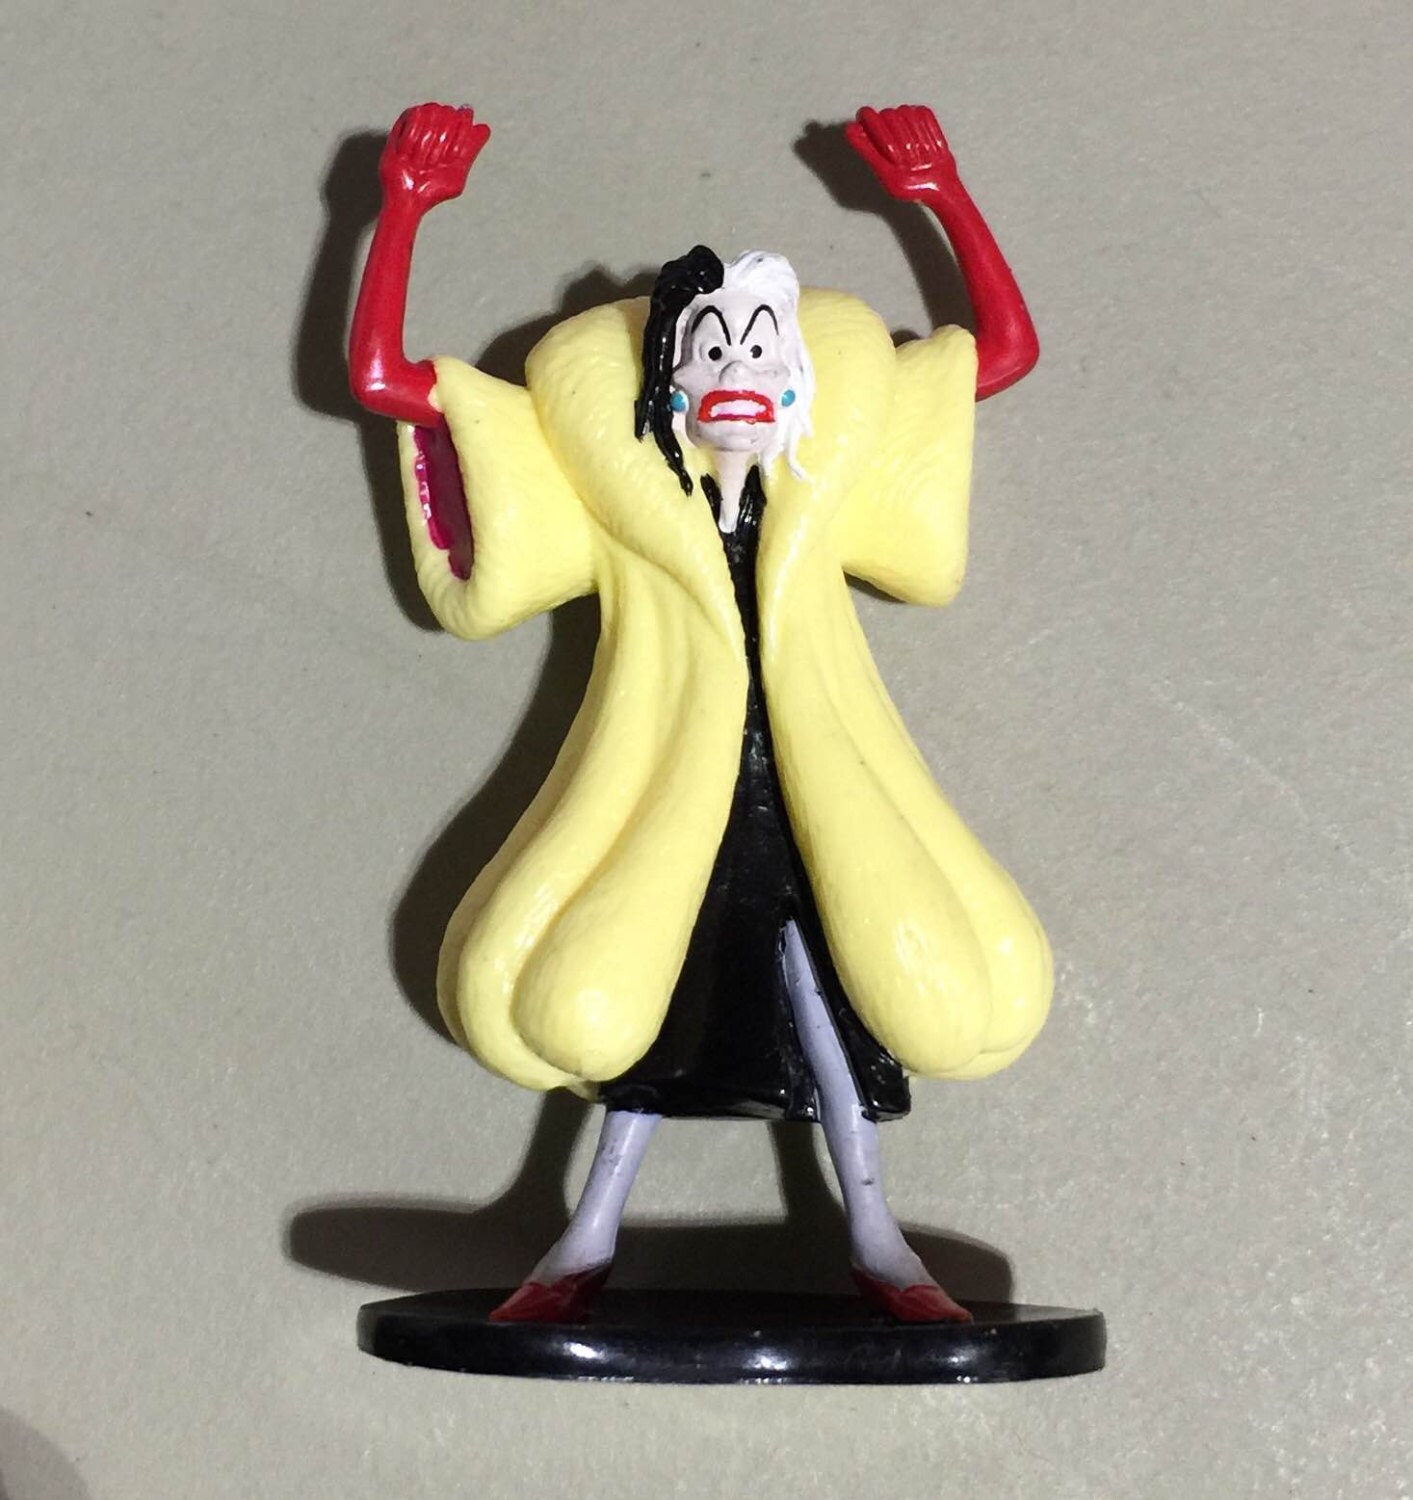 1989 Cruella de Vil Angry Arms 3 Inch PVC Figure from Disneys